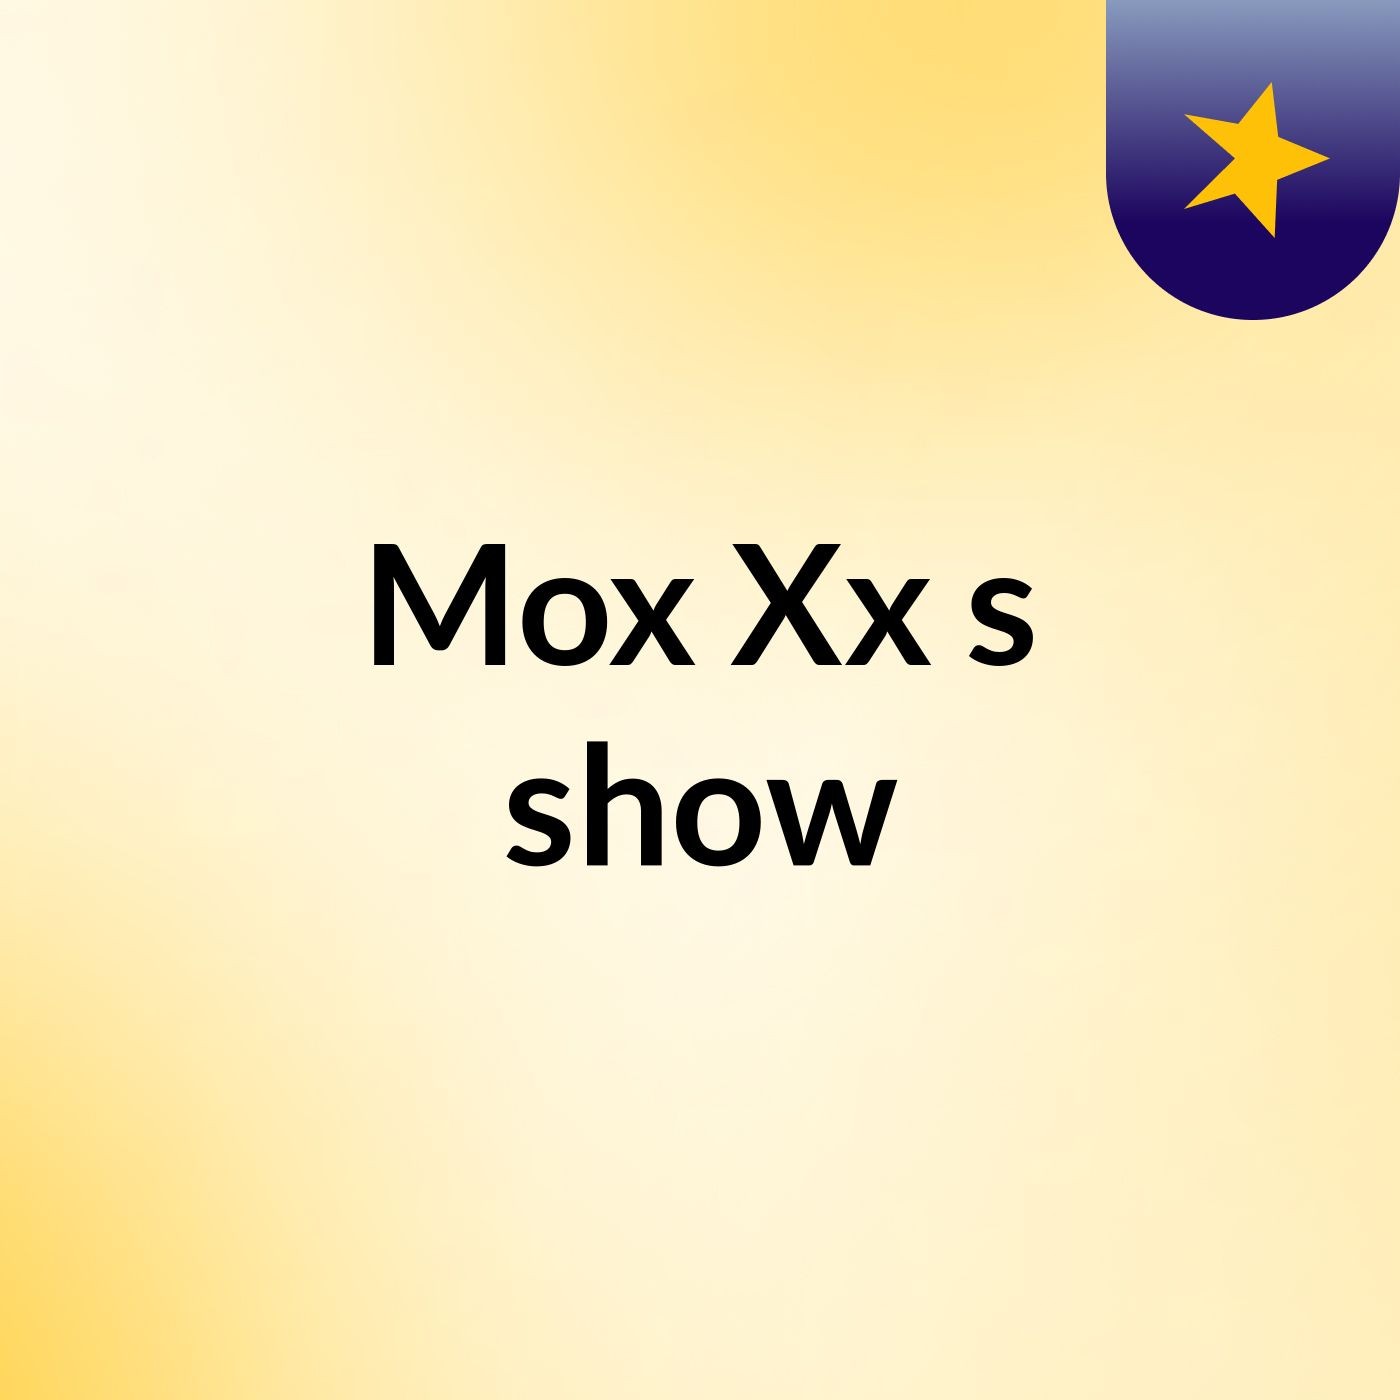 Mox Xx's show